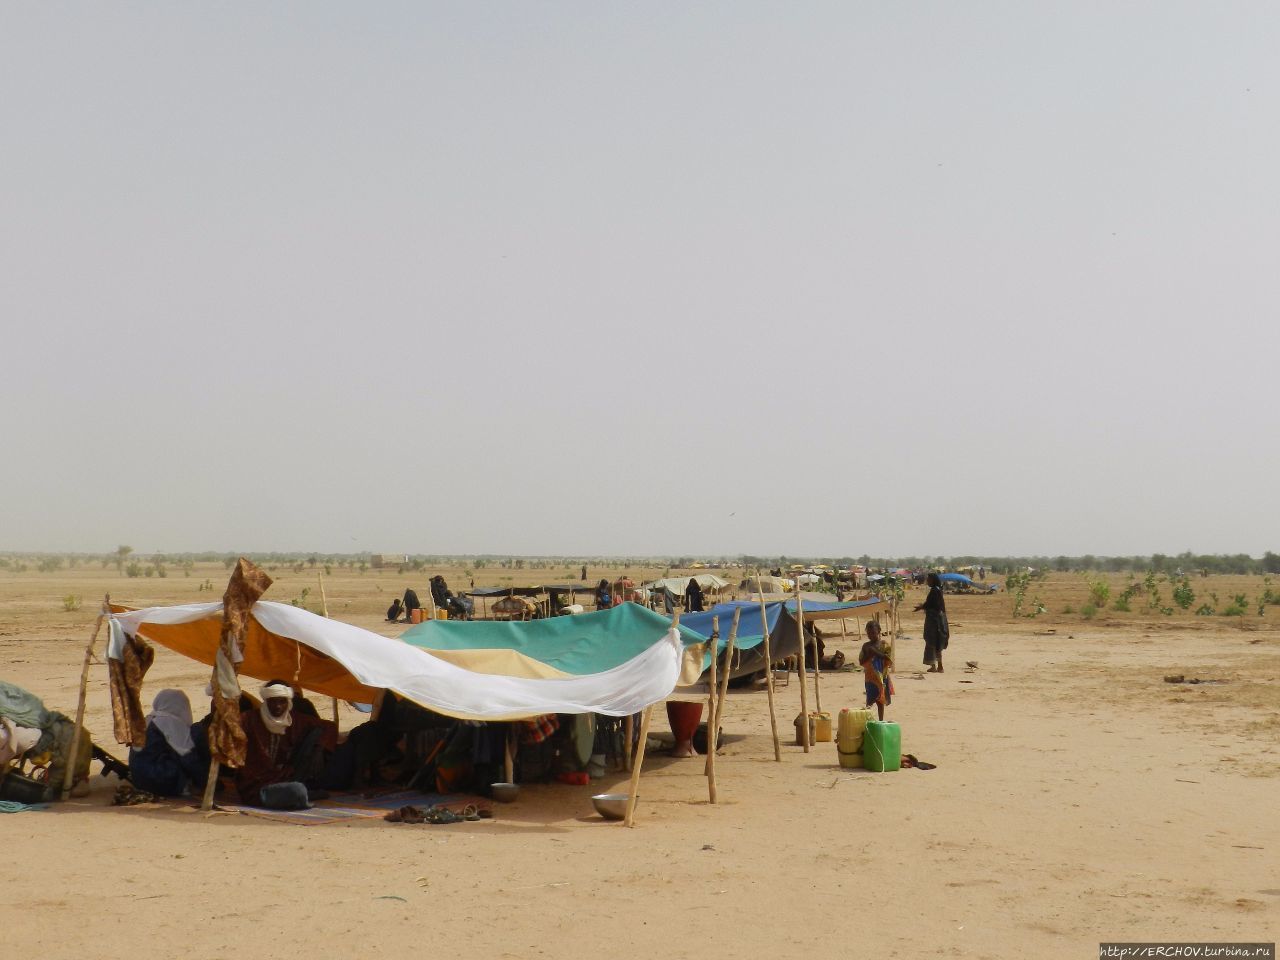 Нигер. Ч — 12. Люди племени водабе Департамент Агадес, Нигер